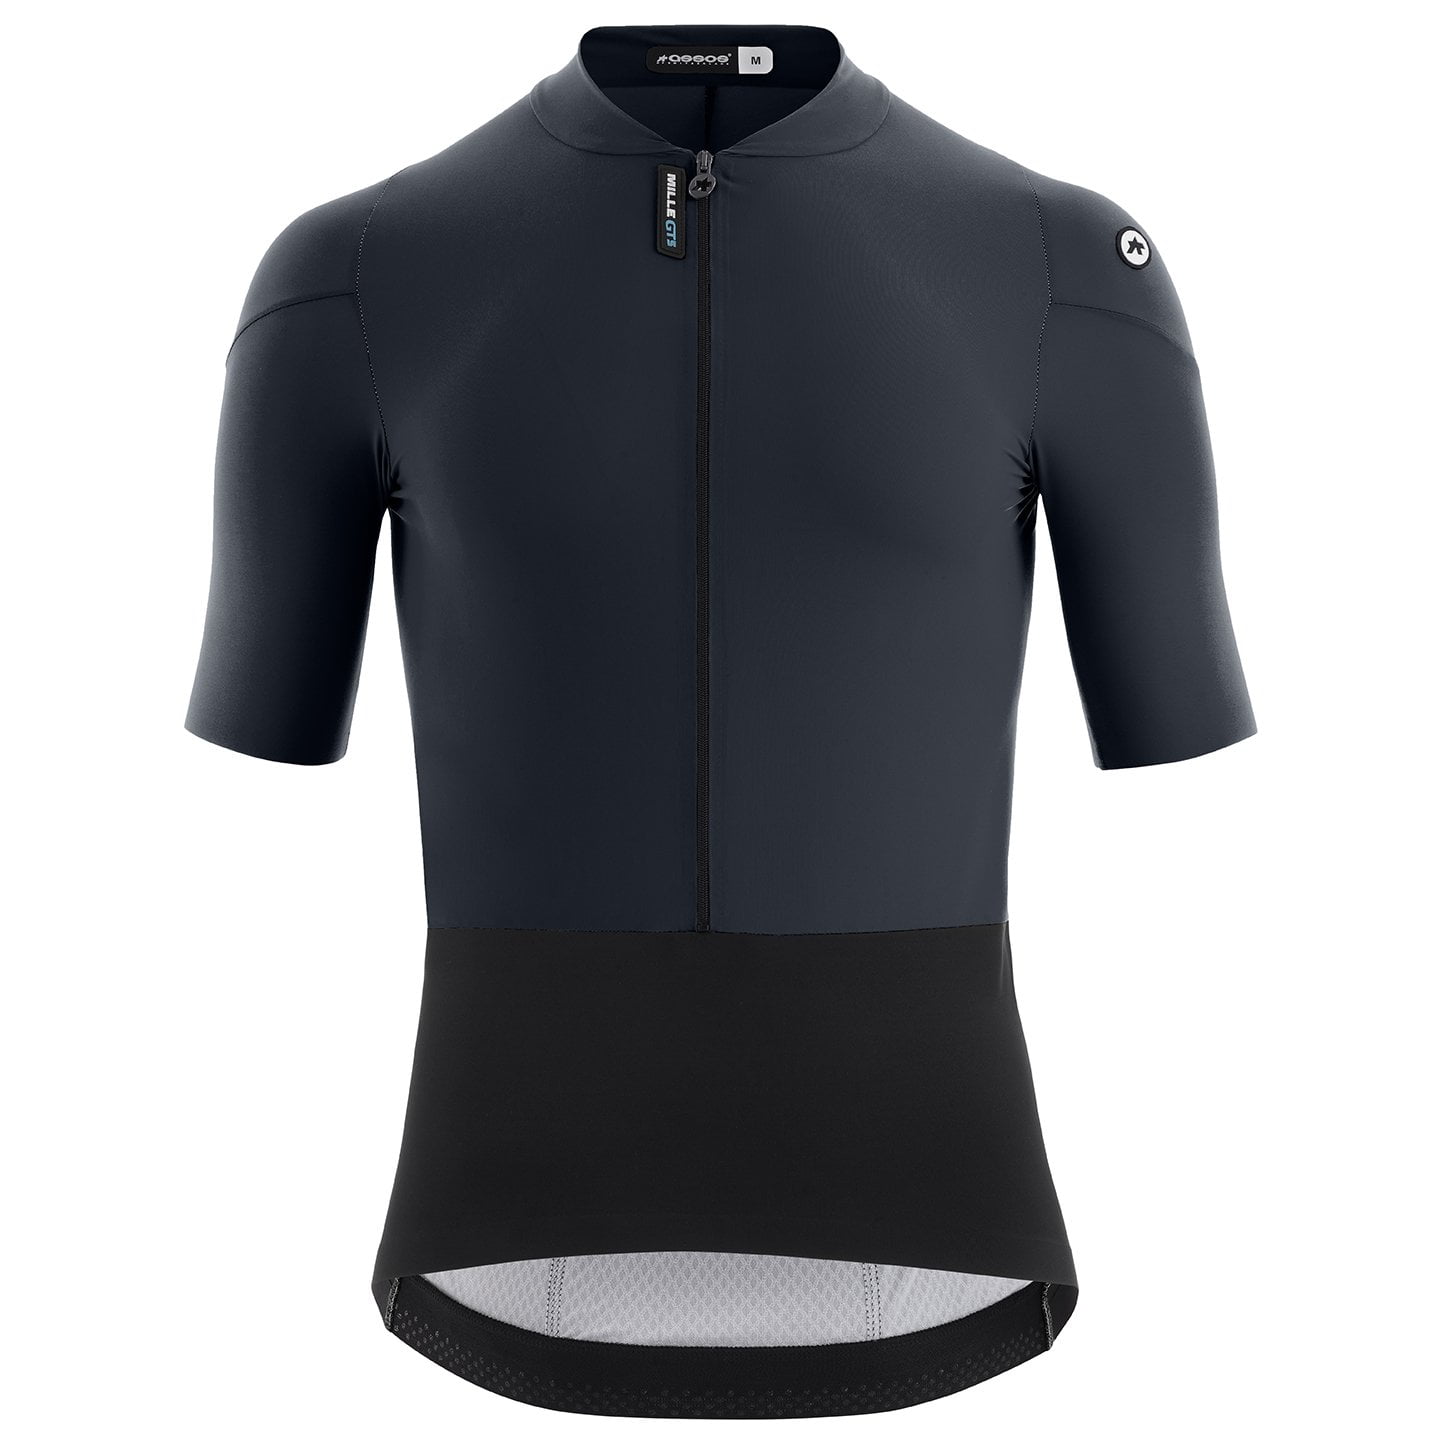 ASSOS Mille GTS C2 Short Sleeve Jersey Short Sleeve Jersey, for men, size M, Cycling jersey, Cycling clothing